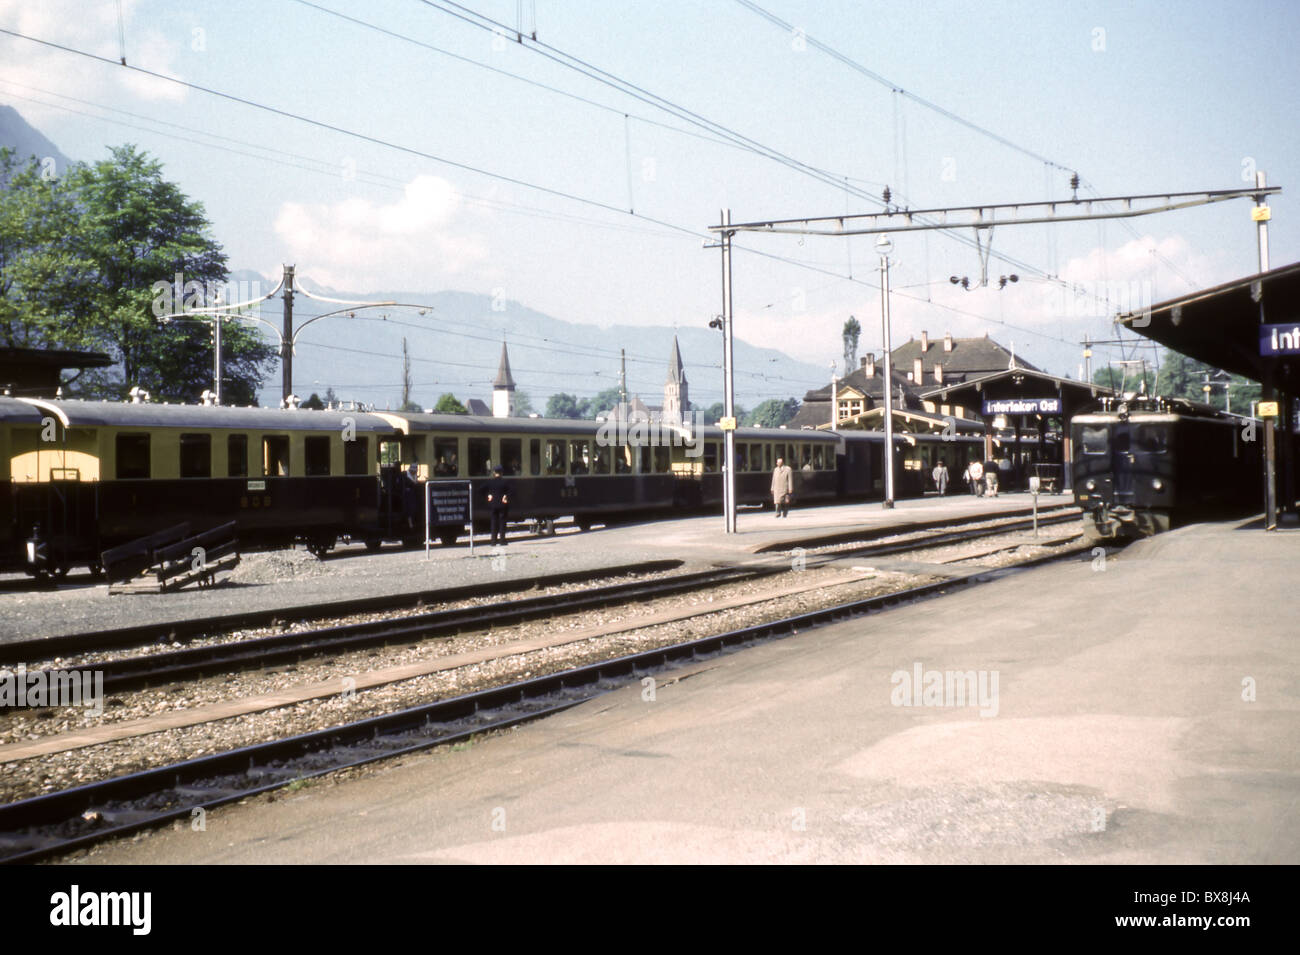 An original 1960's image of Interlaken Ost train station, tracks, platform and building. Stock Photo